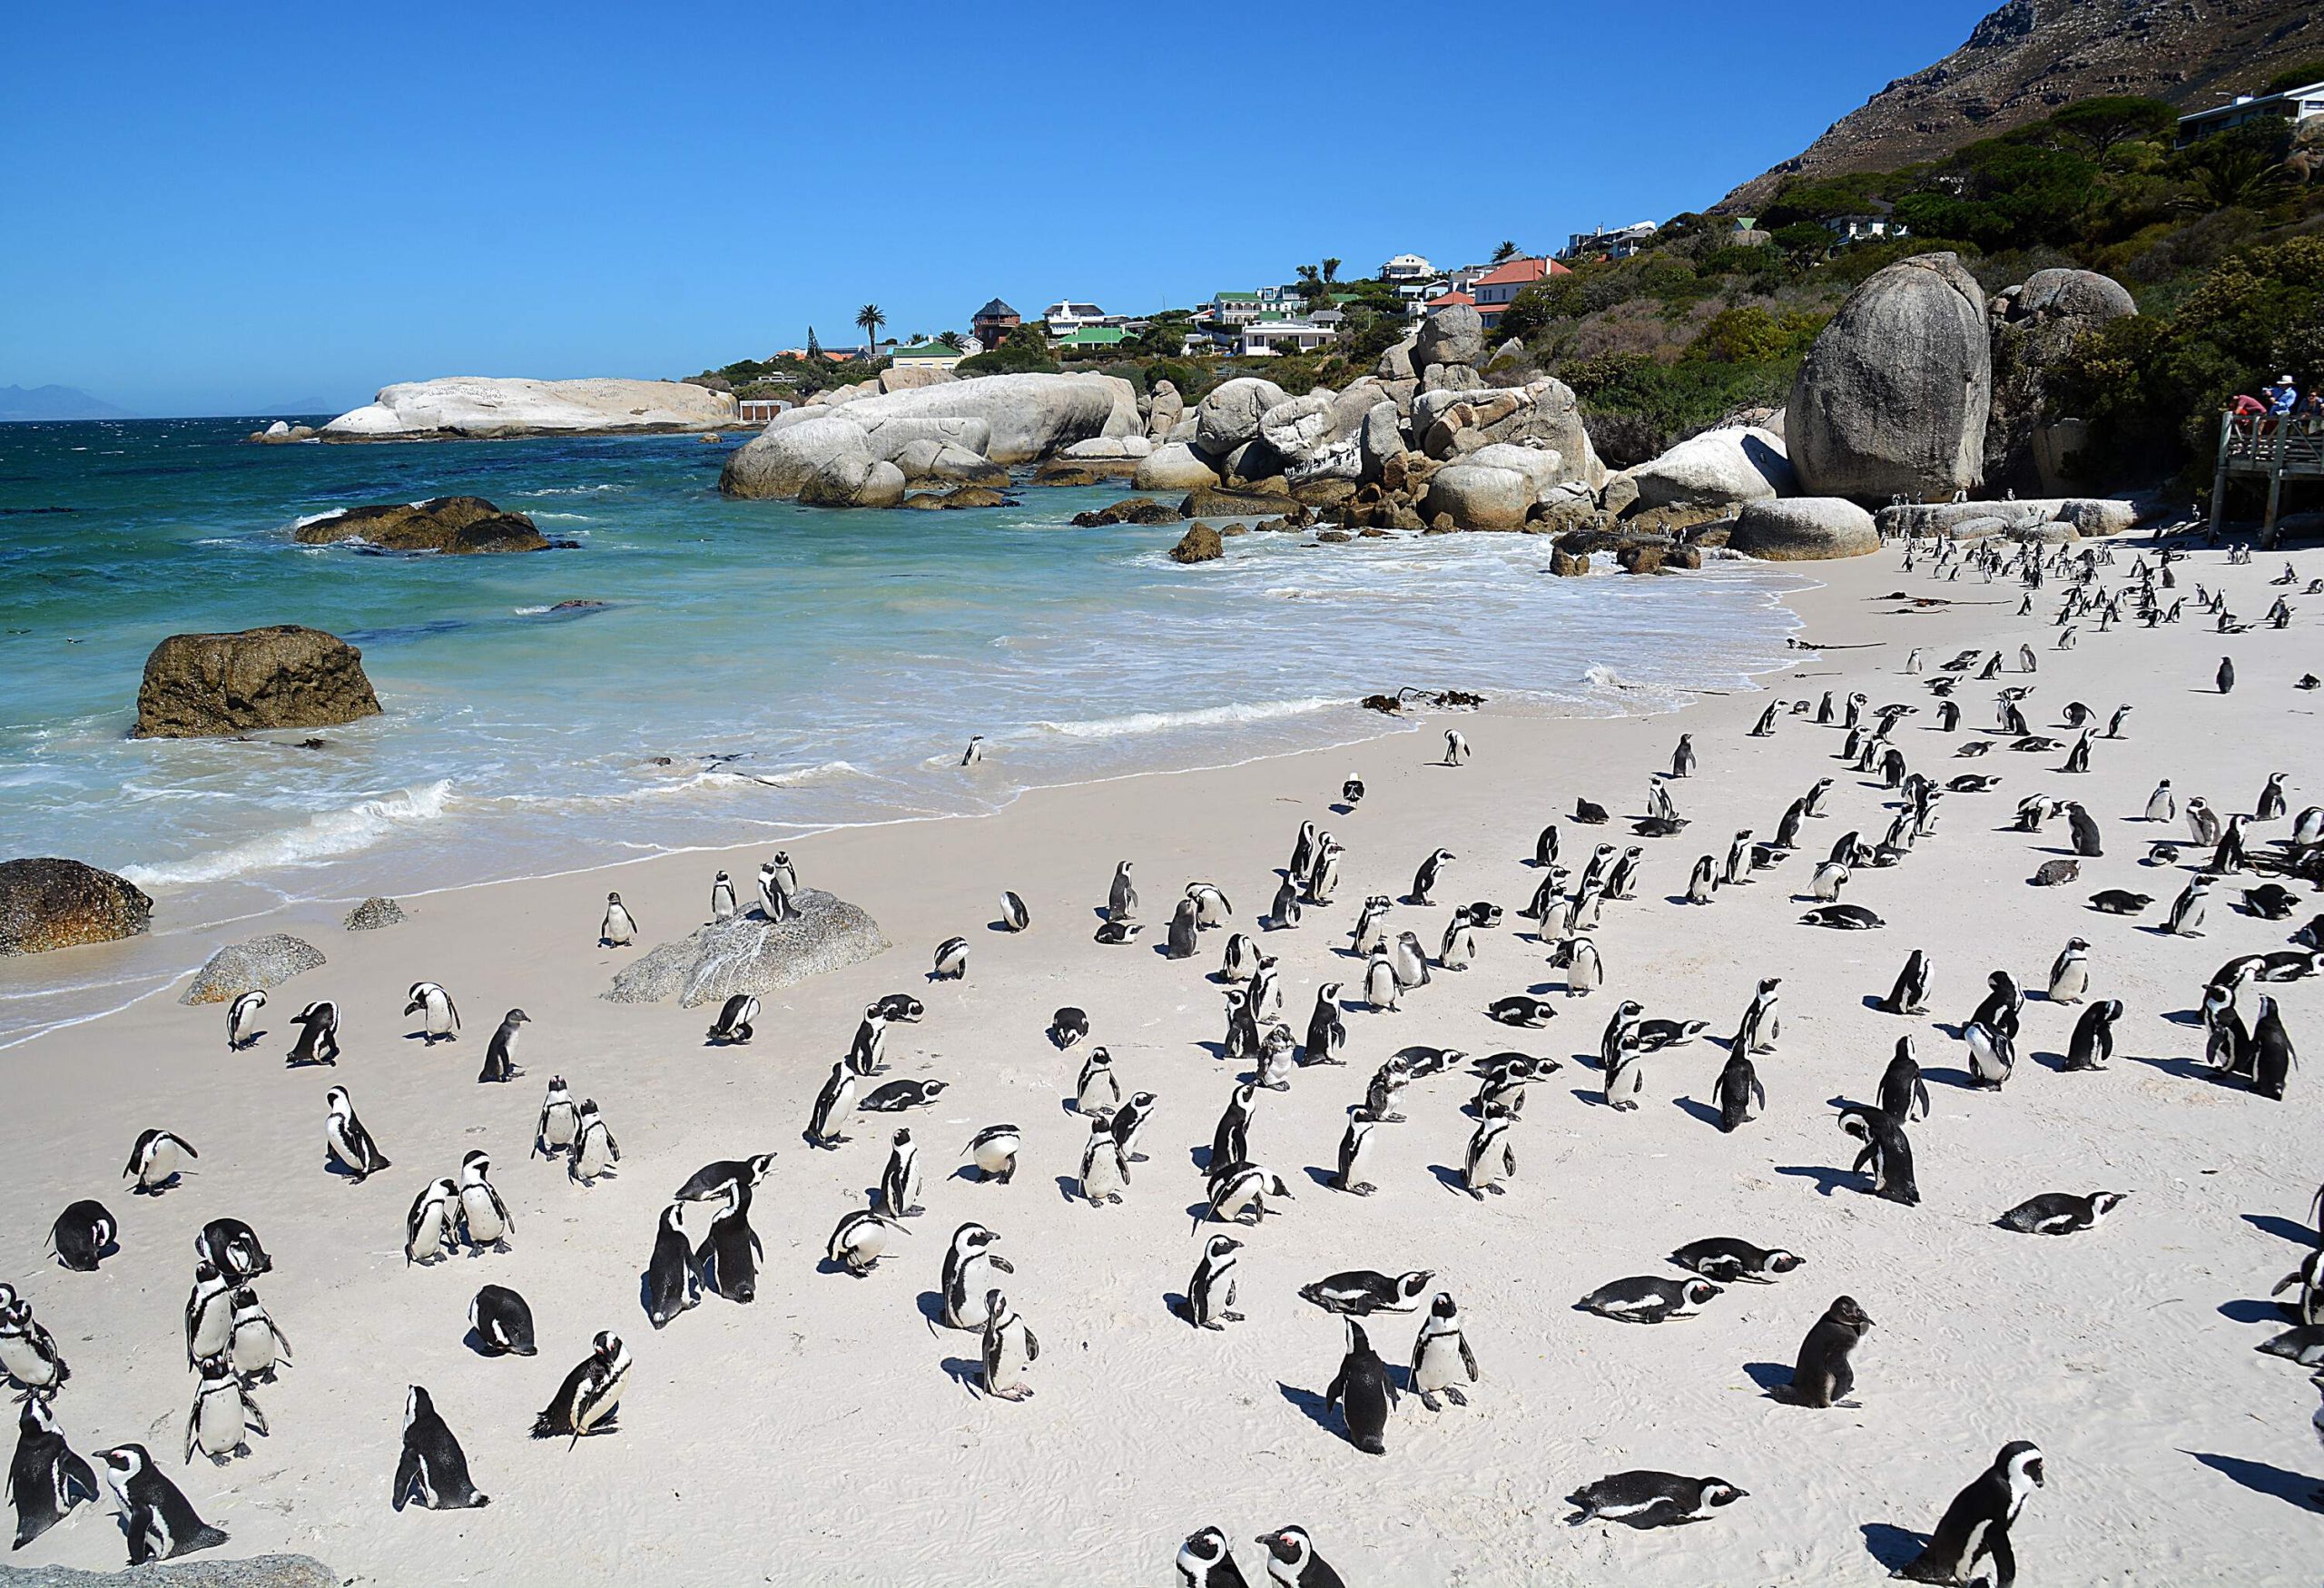 A colony of penguins spread across the pristine beach across from a boulder-strewn sea.